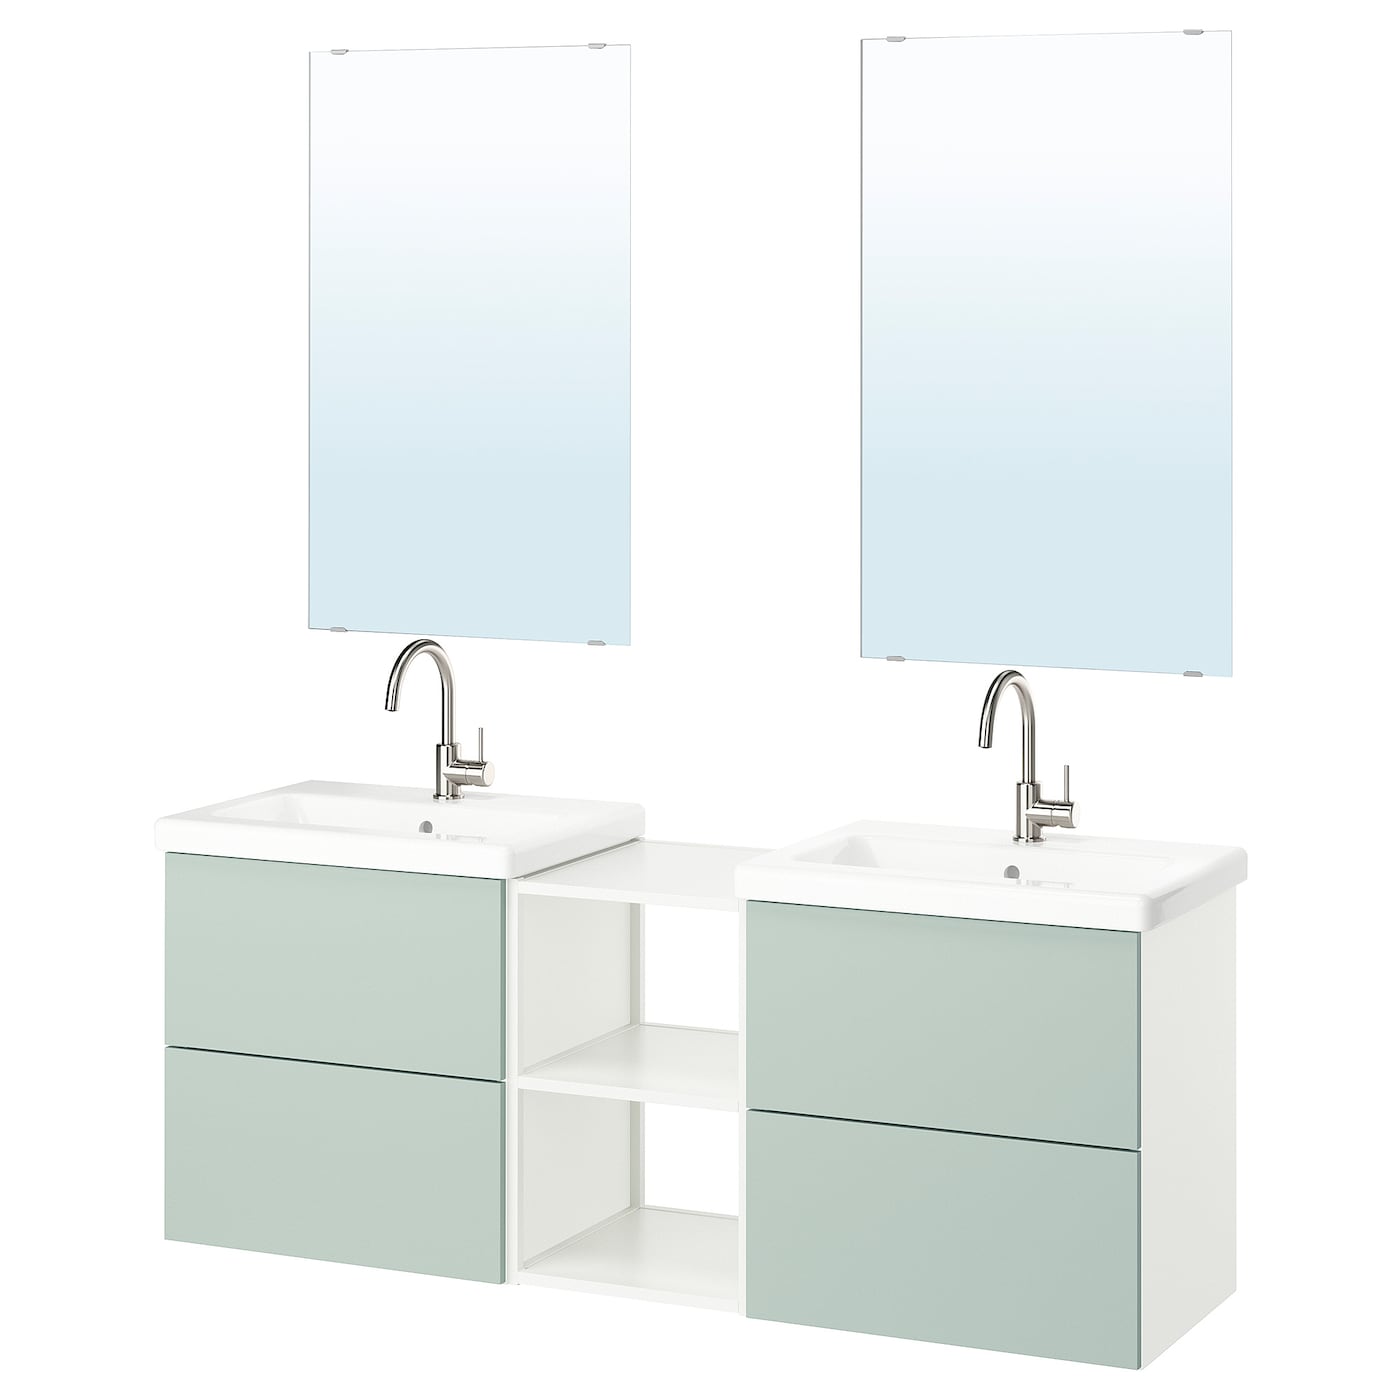 Комбинация для ванной - IKEA ENHET, 164х43х65 см, белый/серо-зеленый, ЭНХЕТ ИКЕА